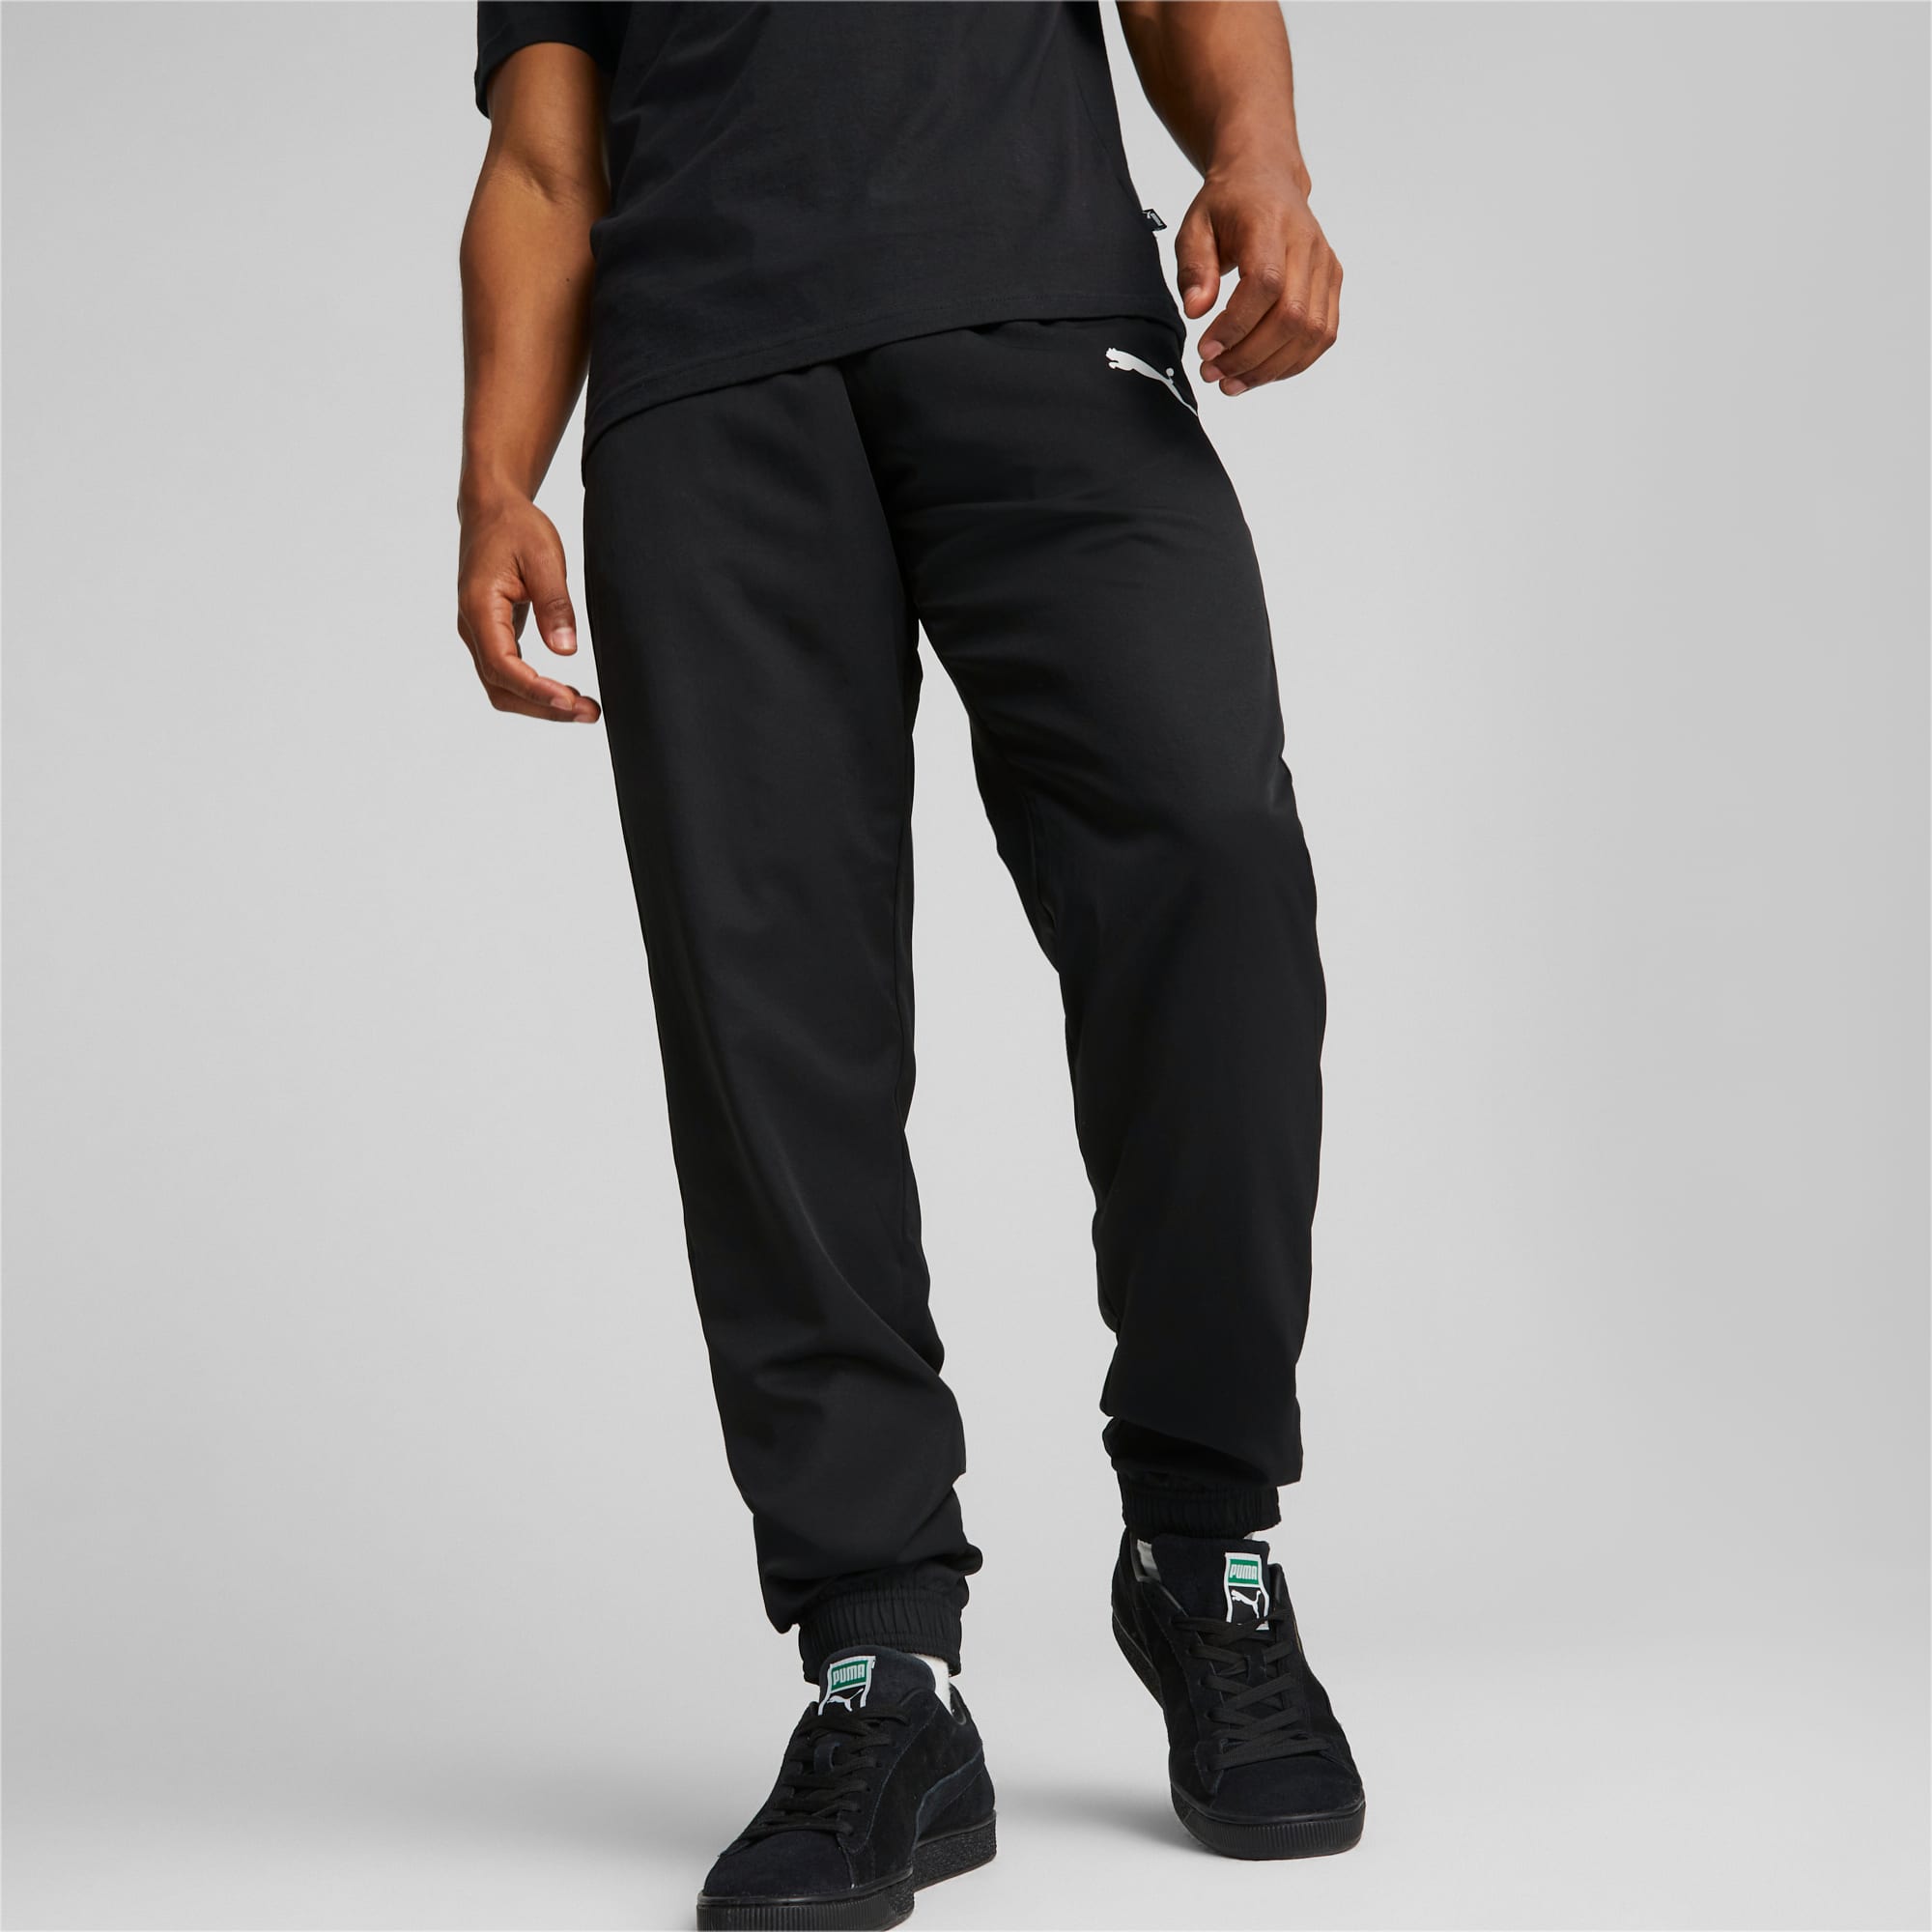 PUMA Active Woven Men's Pants, Black, Size XXL, Clothing